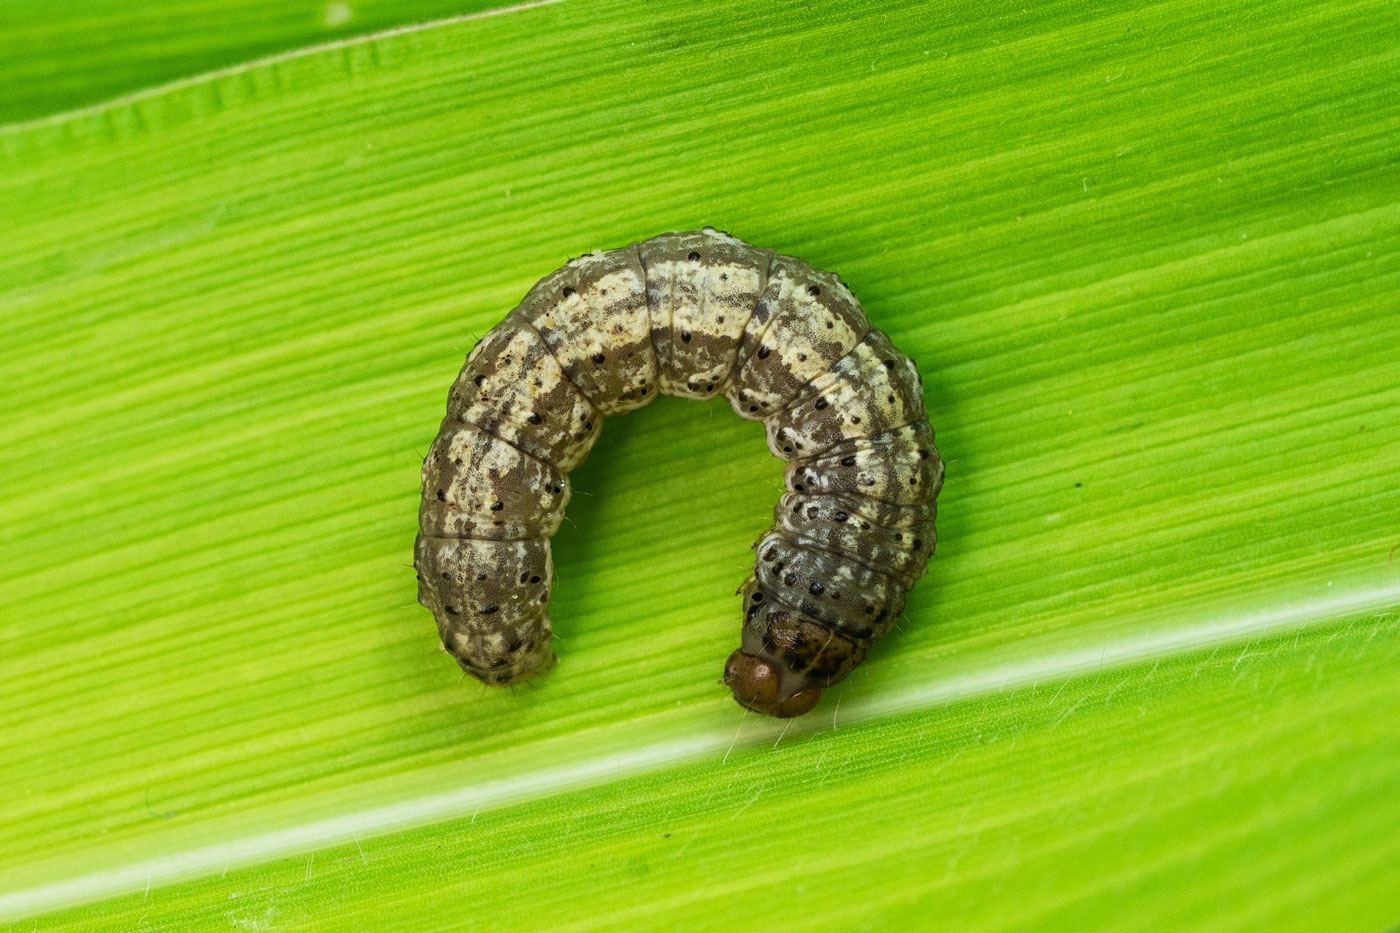 worm on corn leaf